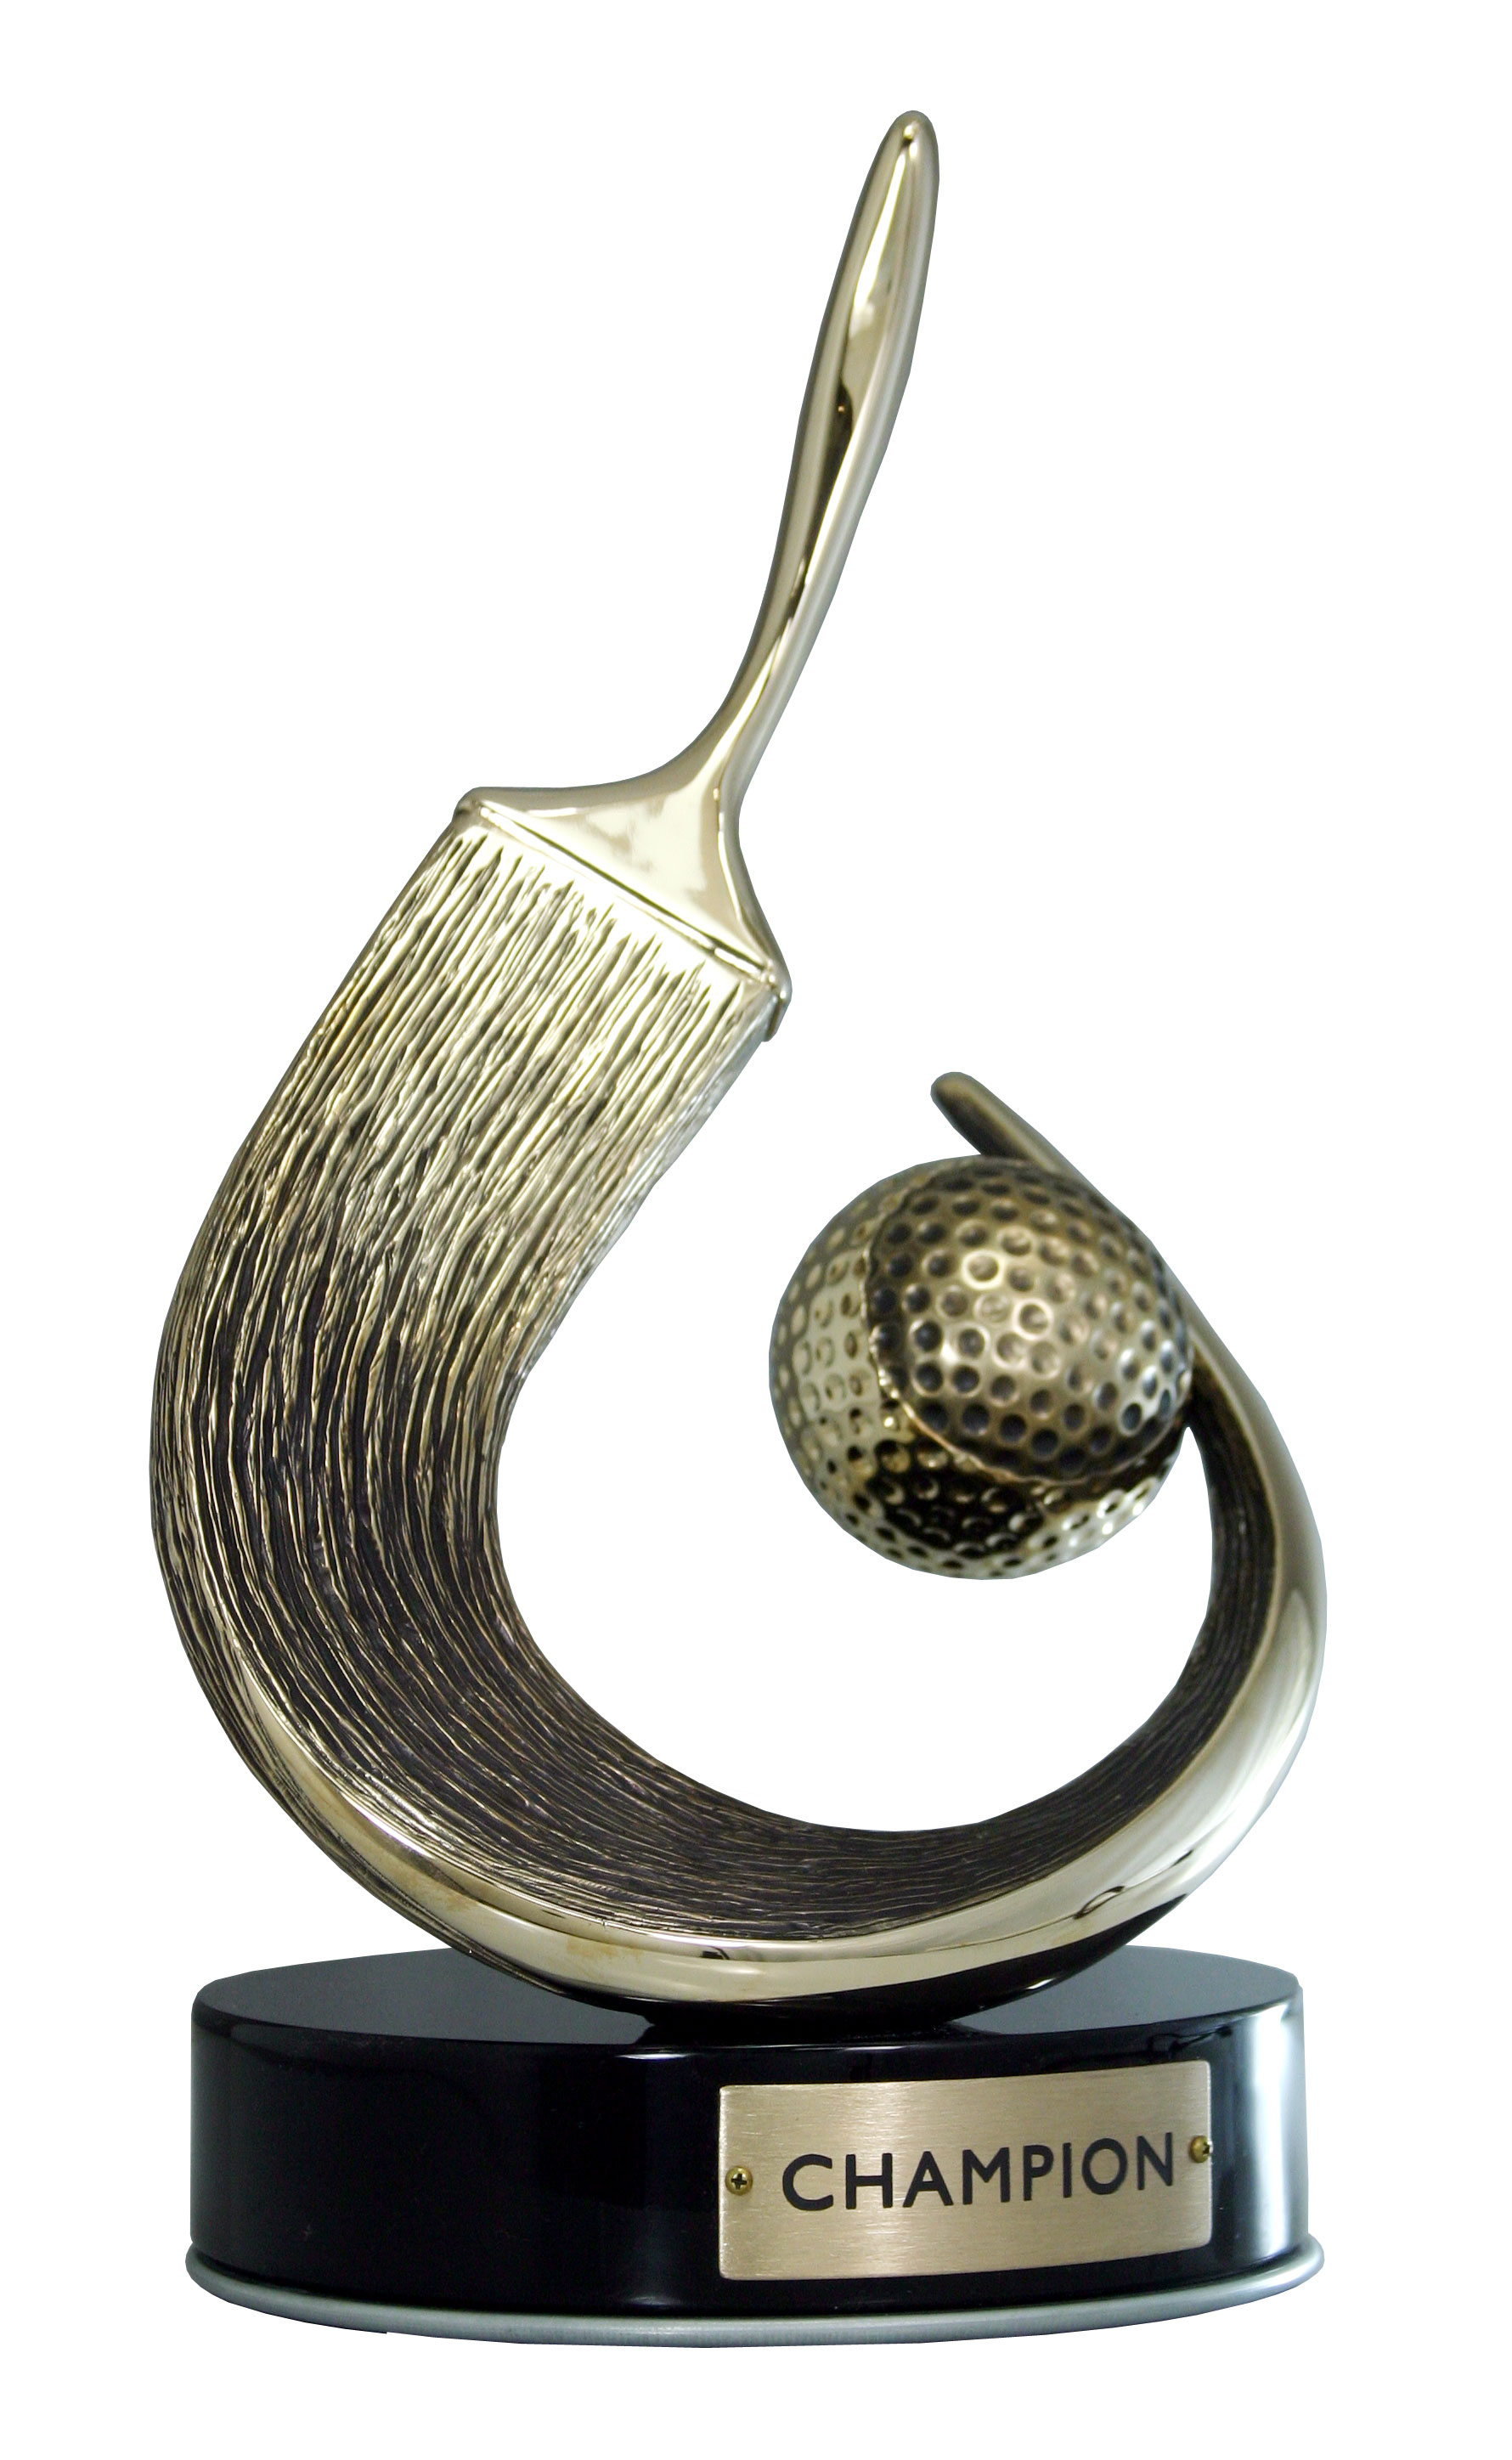 Valspar Championship Trophy made by Malcolm DeMille